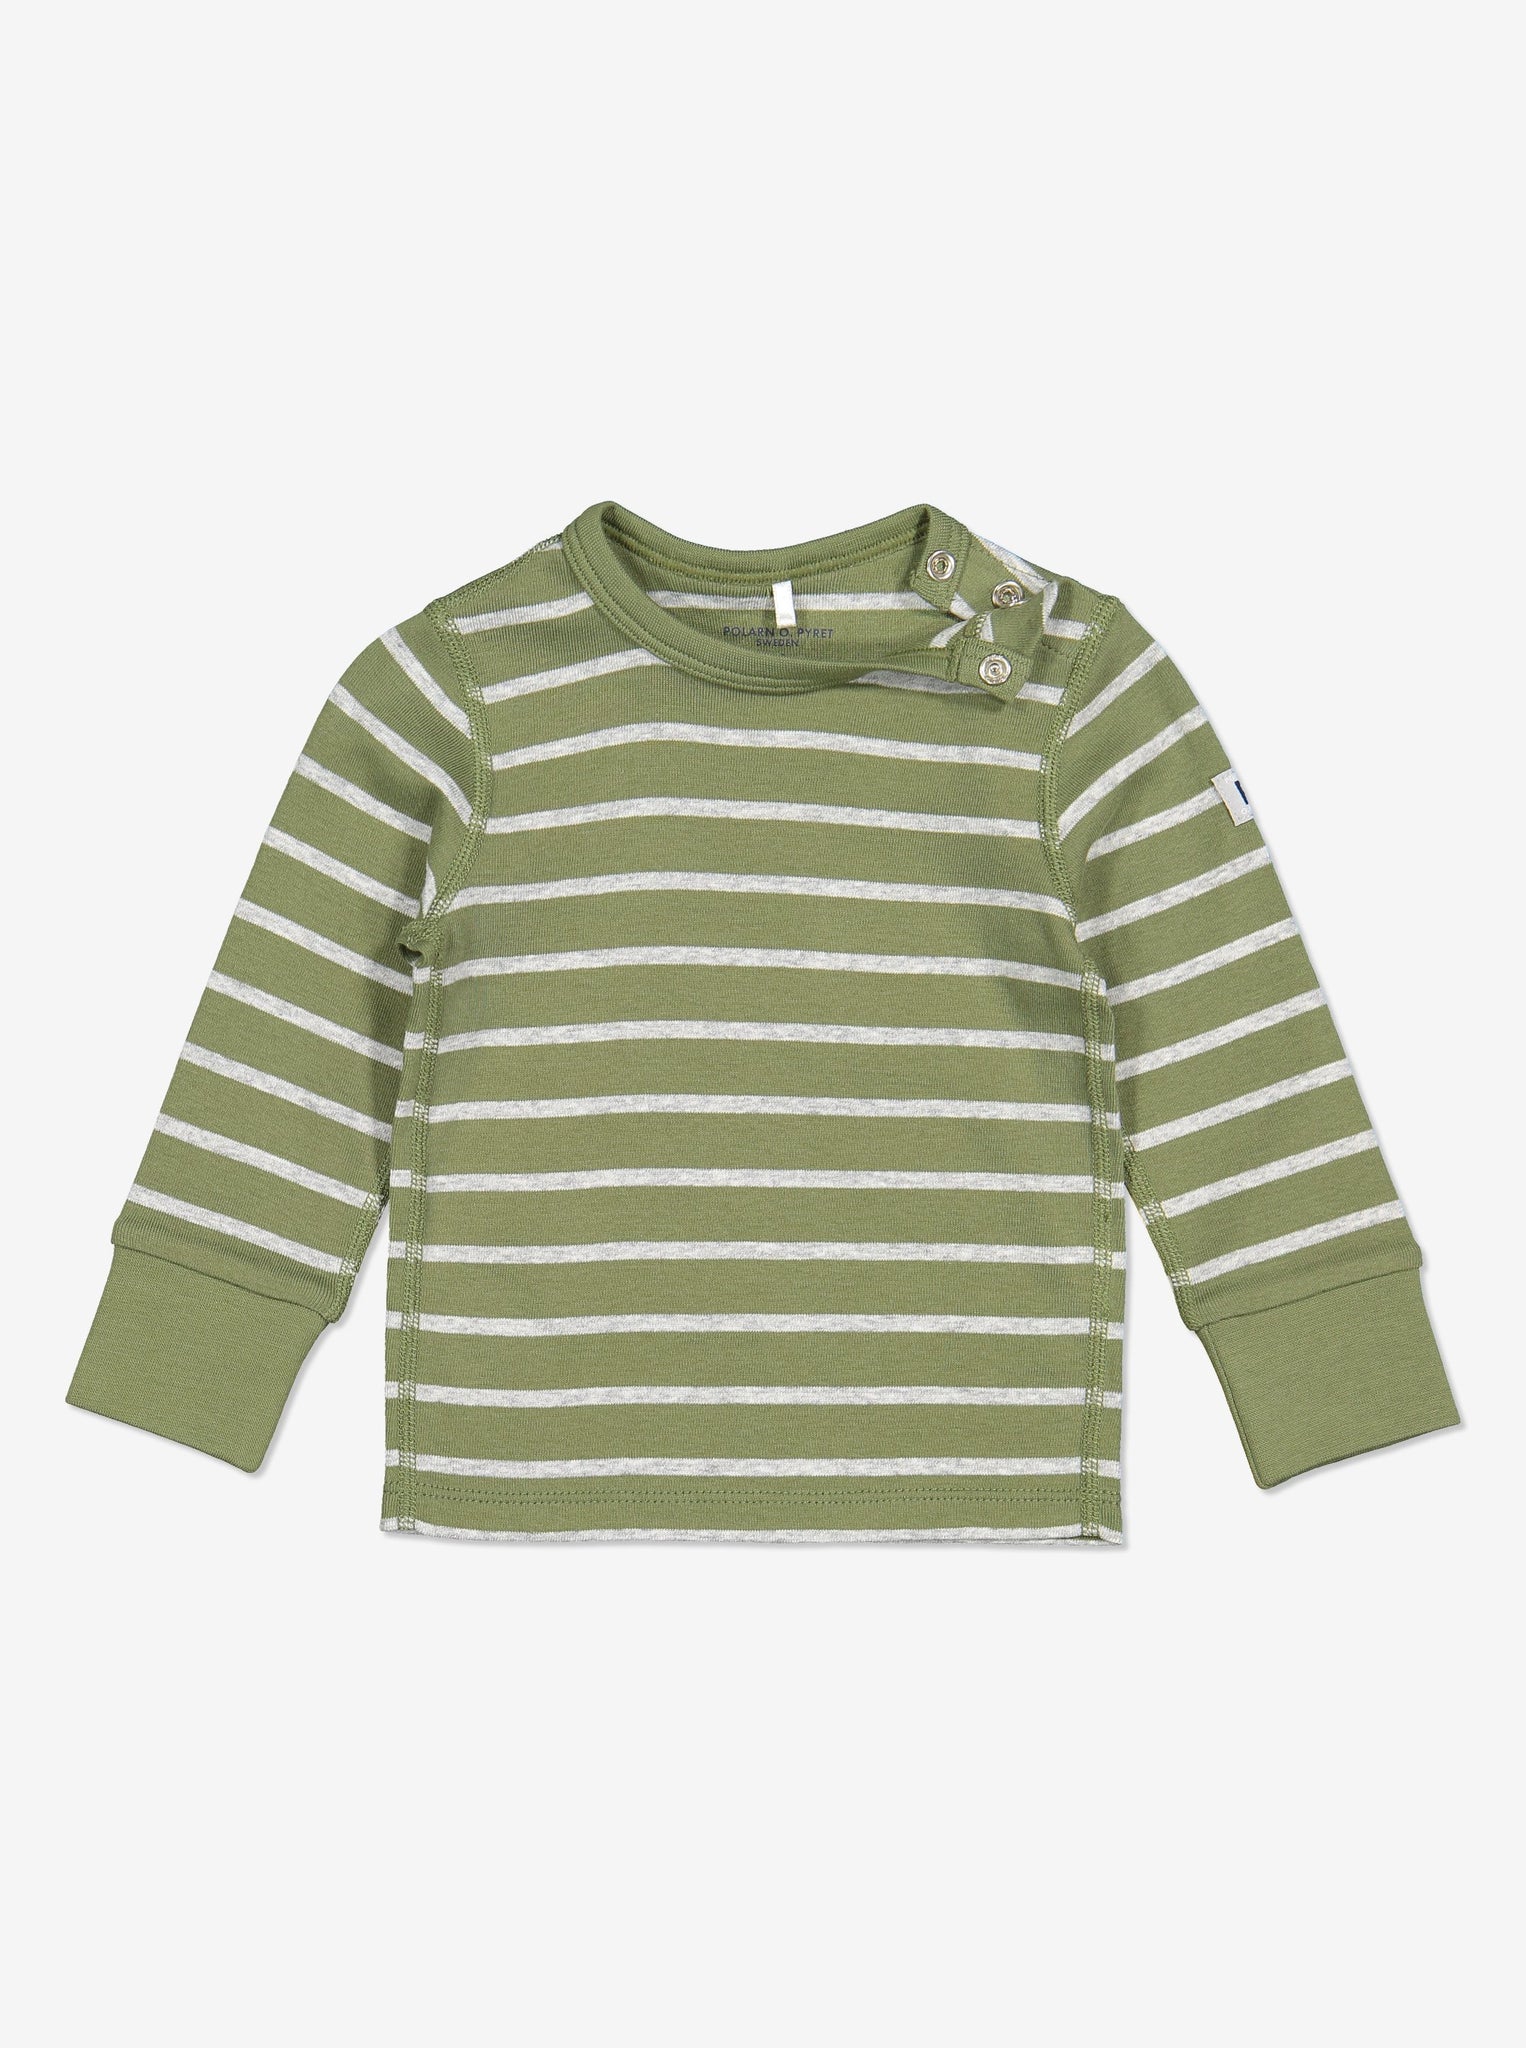 Striped Kids Top-Unisex-2m-6y-Green